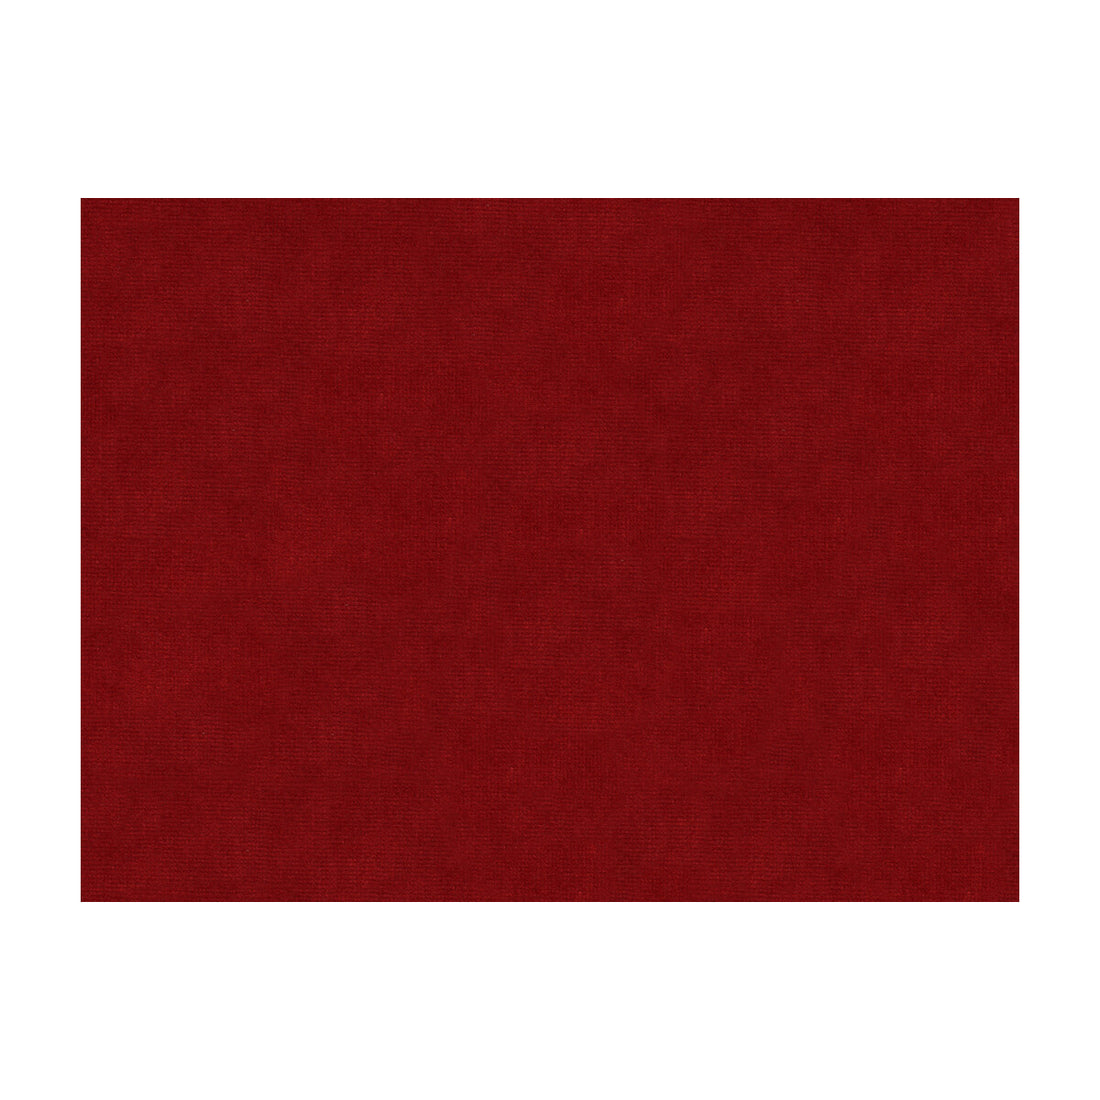 Charmant Velvet fabric in crimson color - pattern 8013150.19.0 - by Brunschwig &amp; Fils